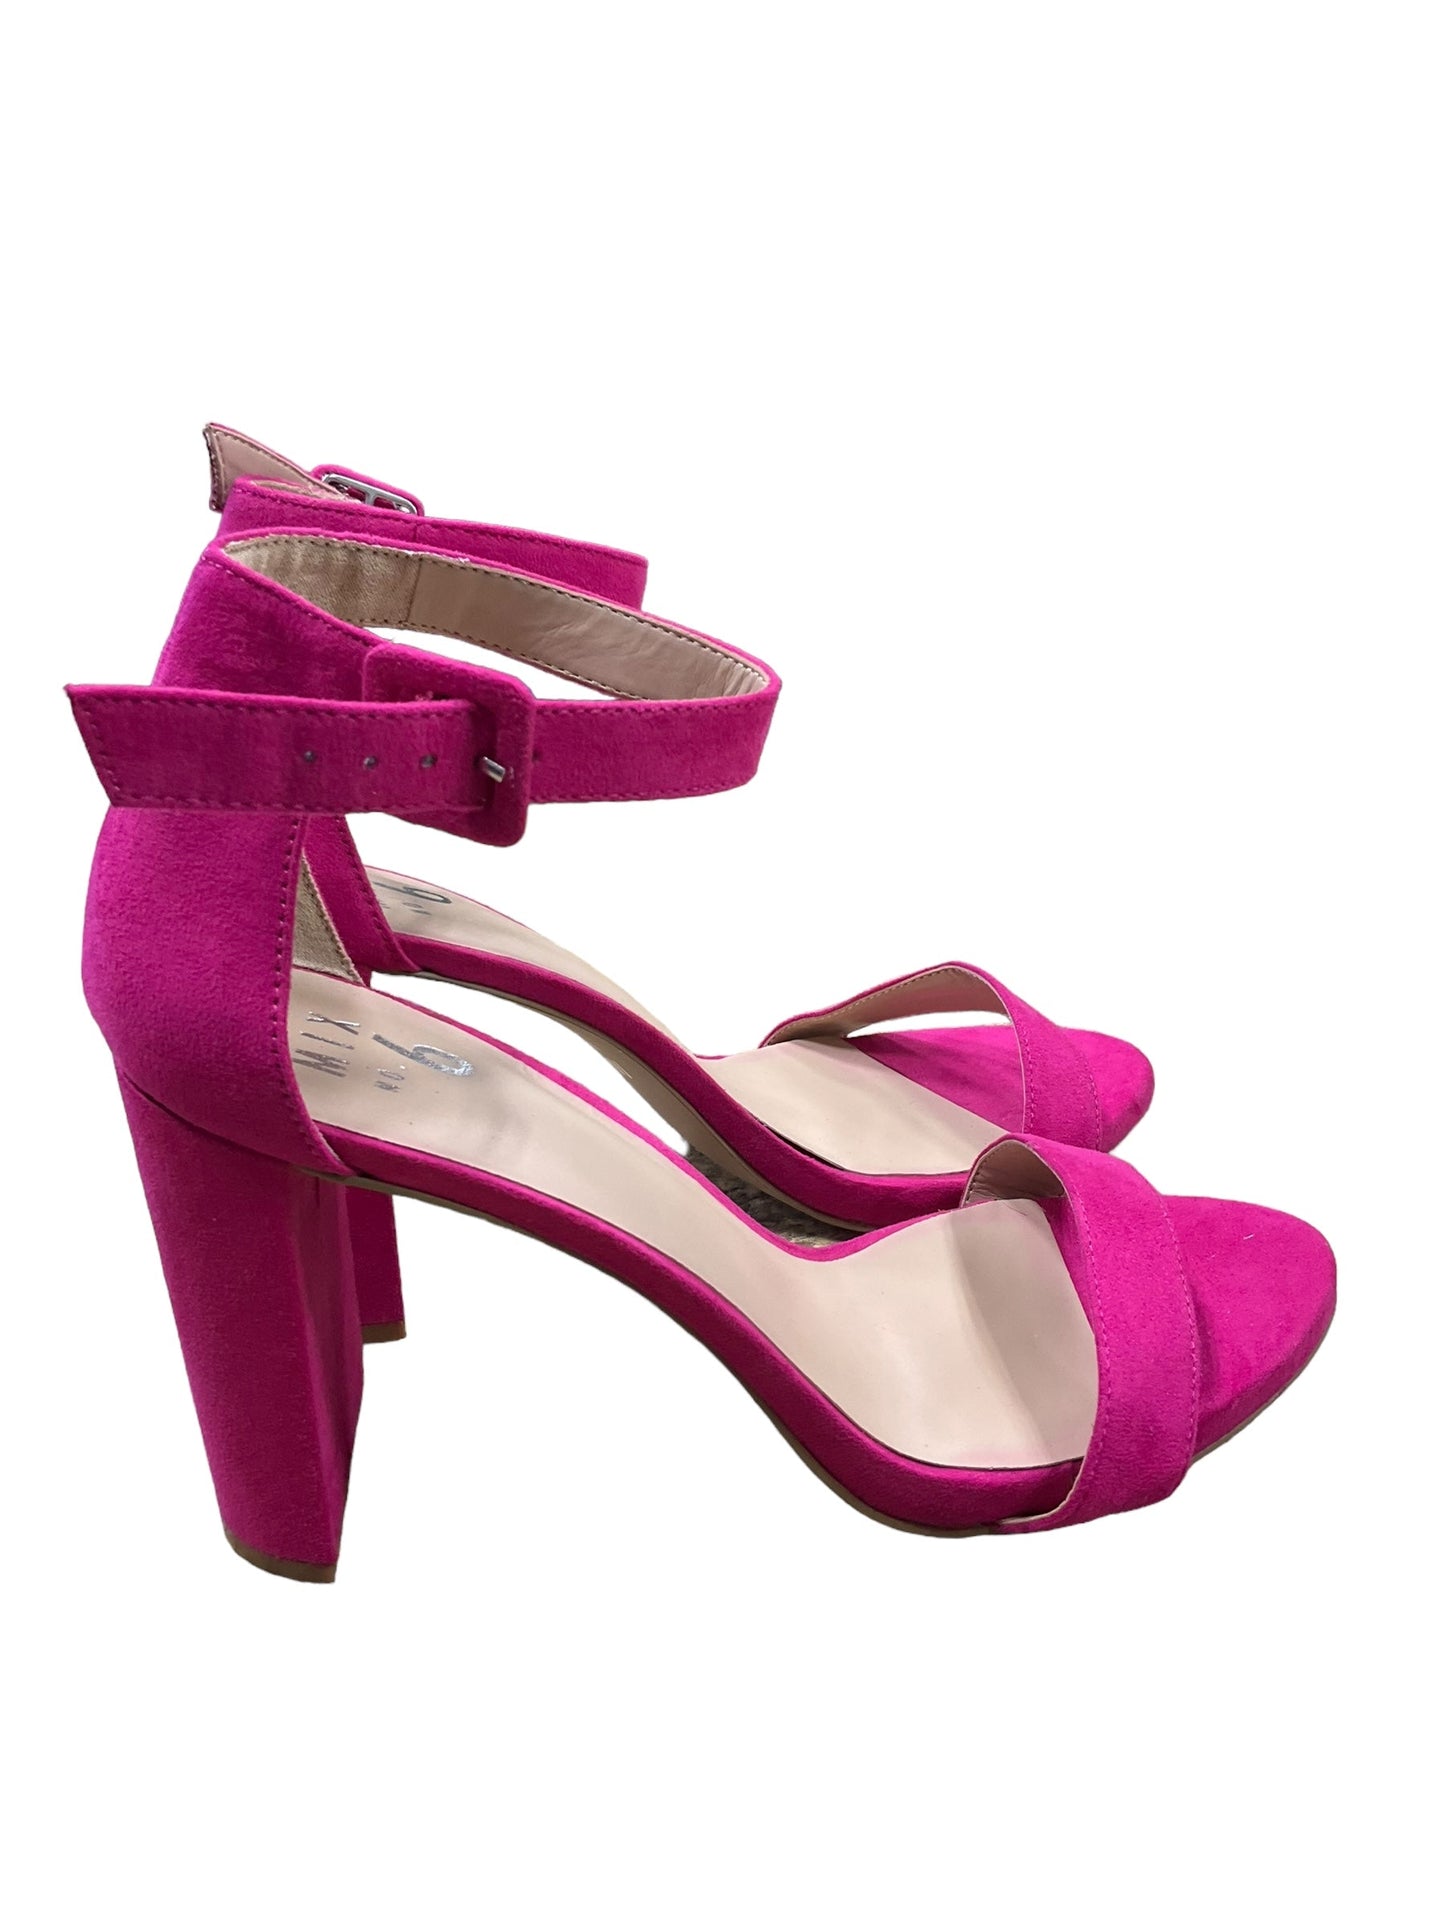 Pink Shoes Heels Block Mix No 6, Size 9.5